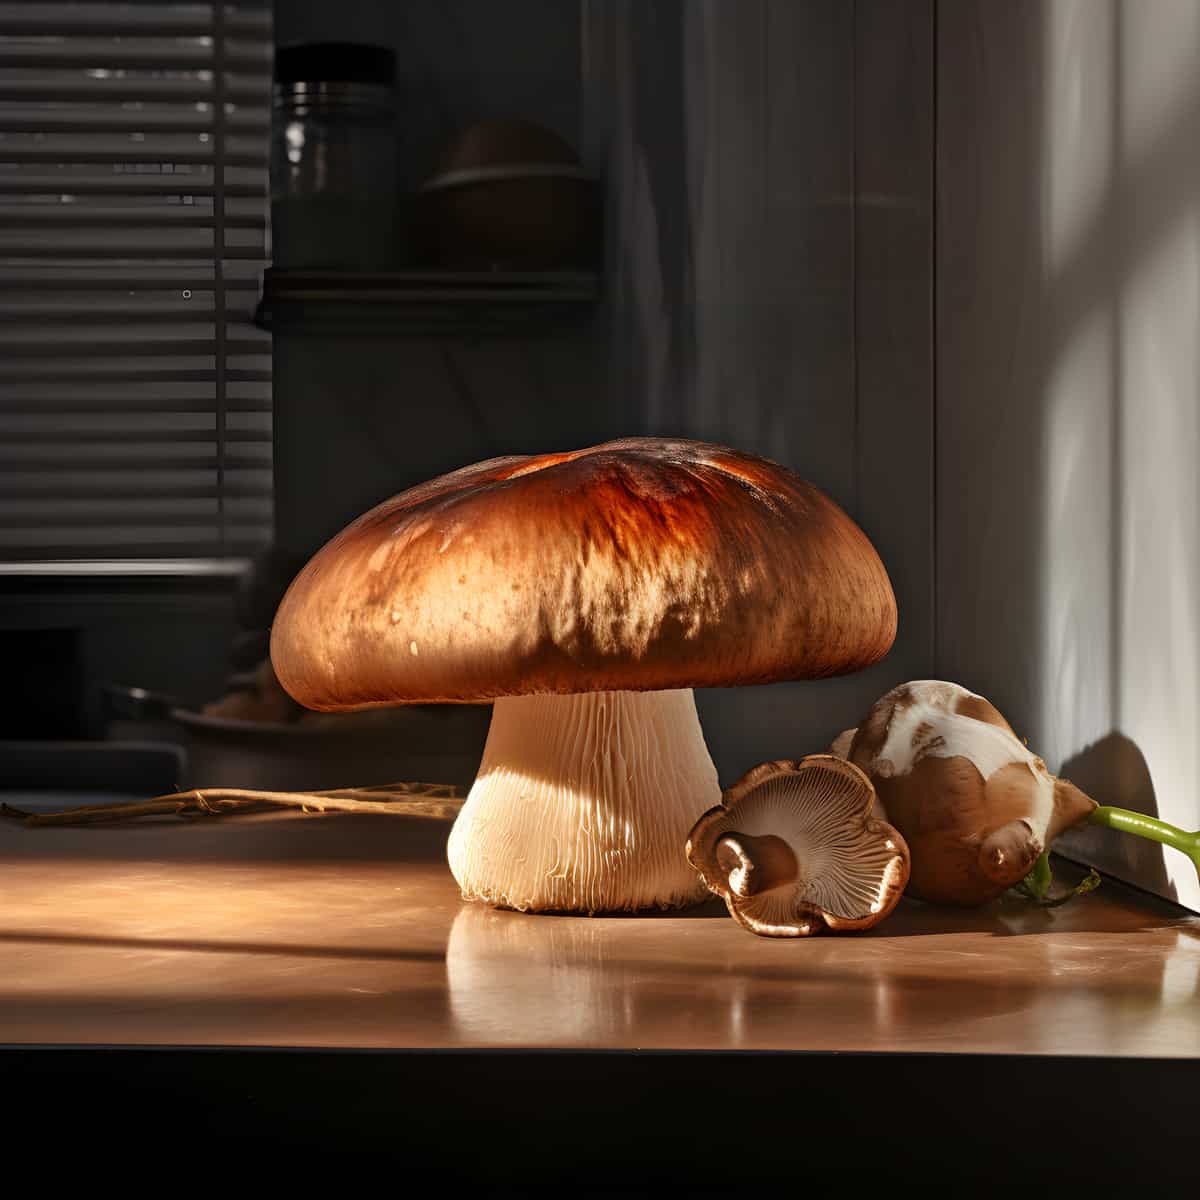 Portobello Mushrooms on a kitchen counter